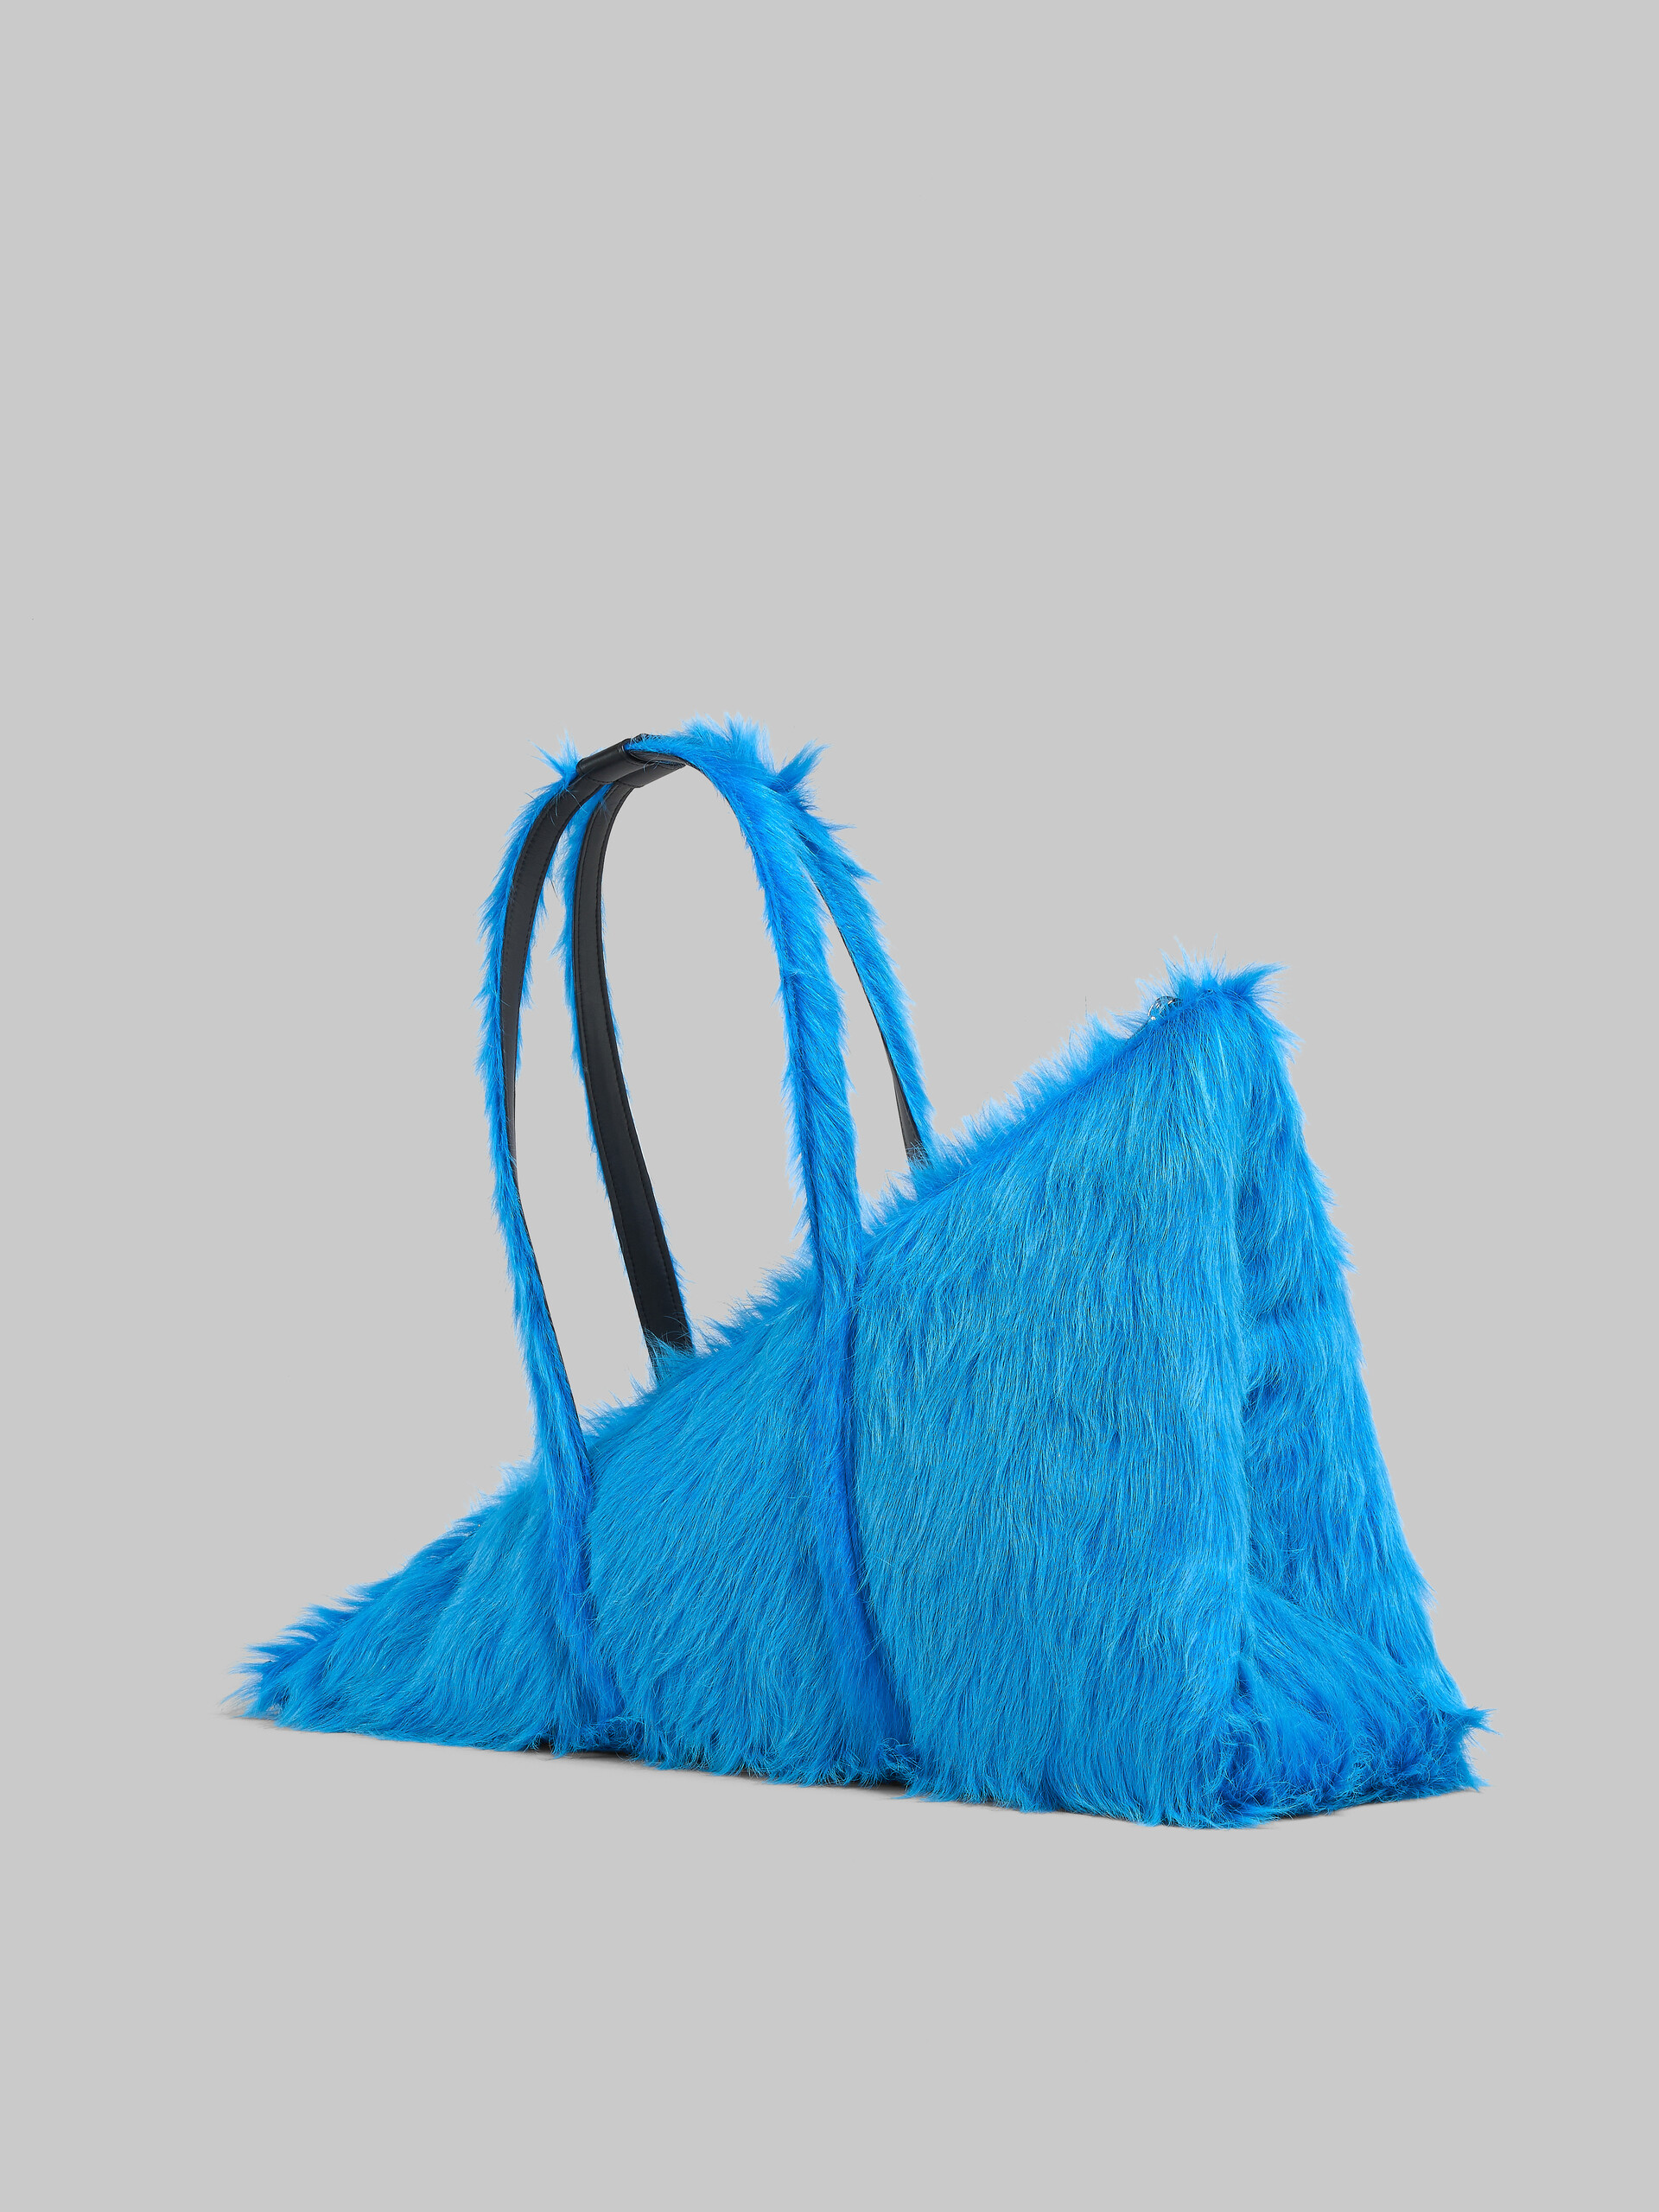 Dreieckige Duffle Bag Prisma aus Kalbsfell in Blau - Reisetasche - Image 3